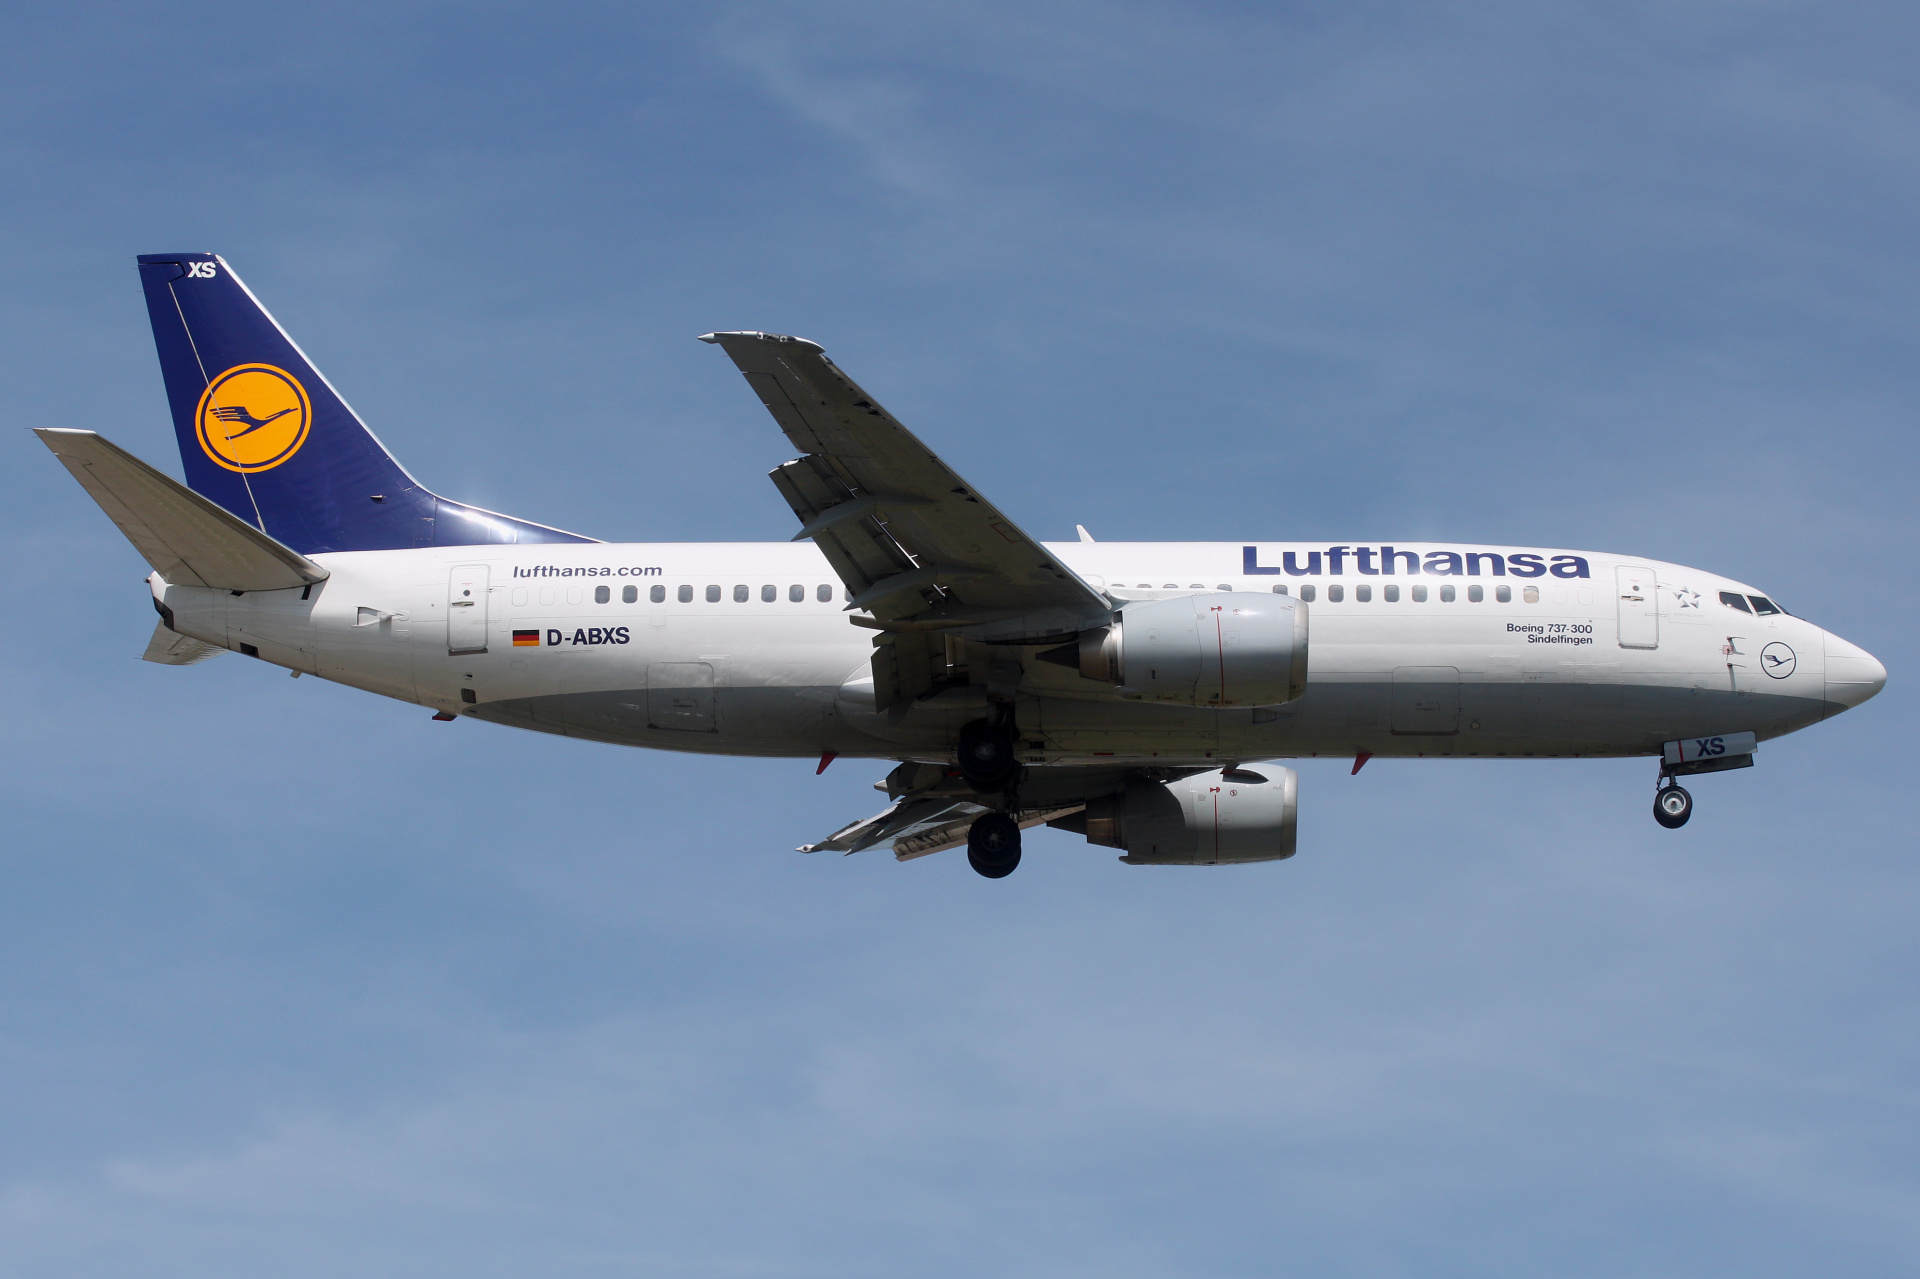 D-ABXS (Aircraft » EPWA Spotting » Boeing 737-300 » Lufthansa)